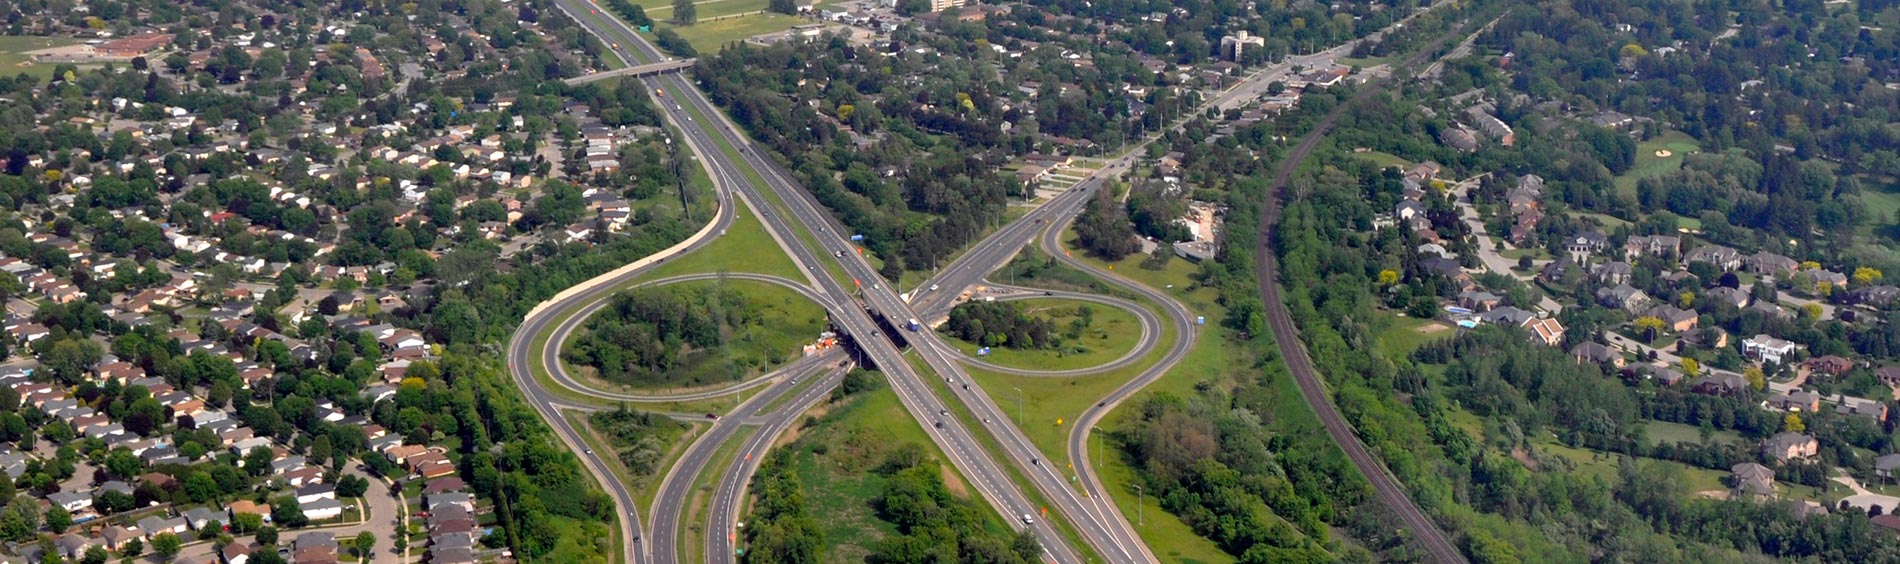 Highway Aerial View